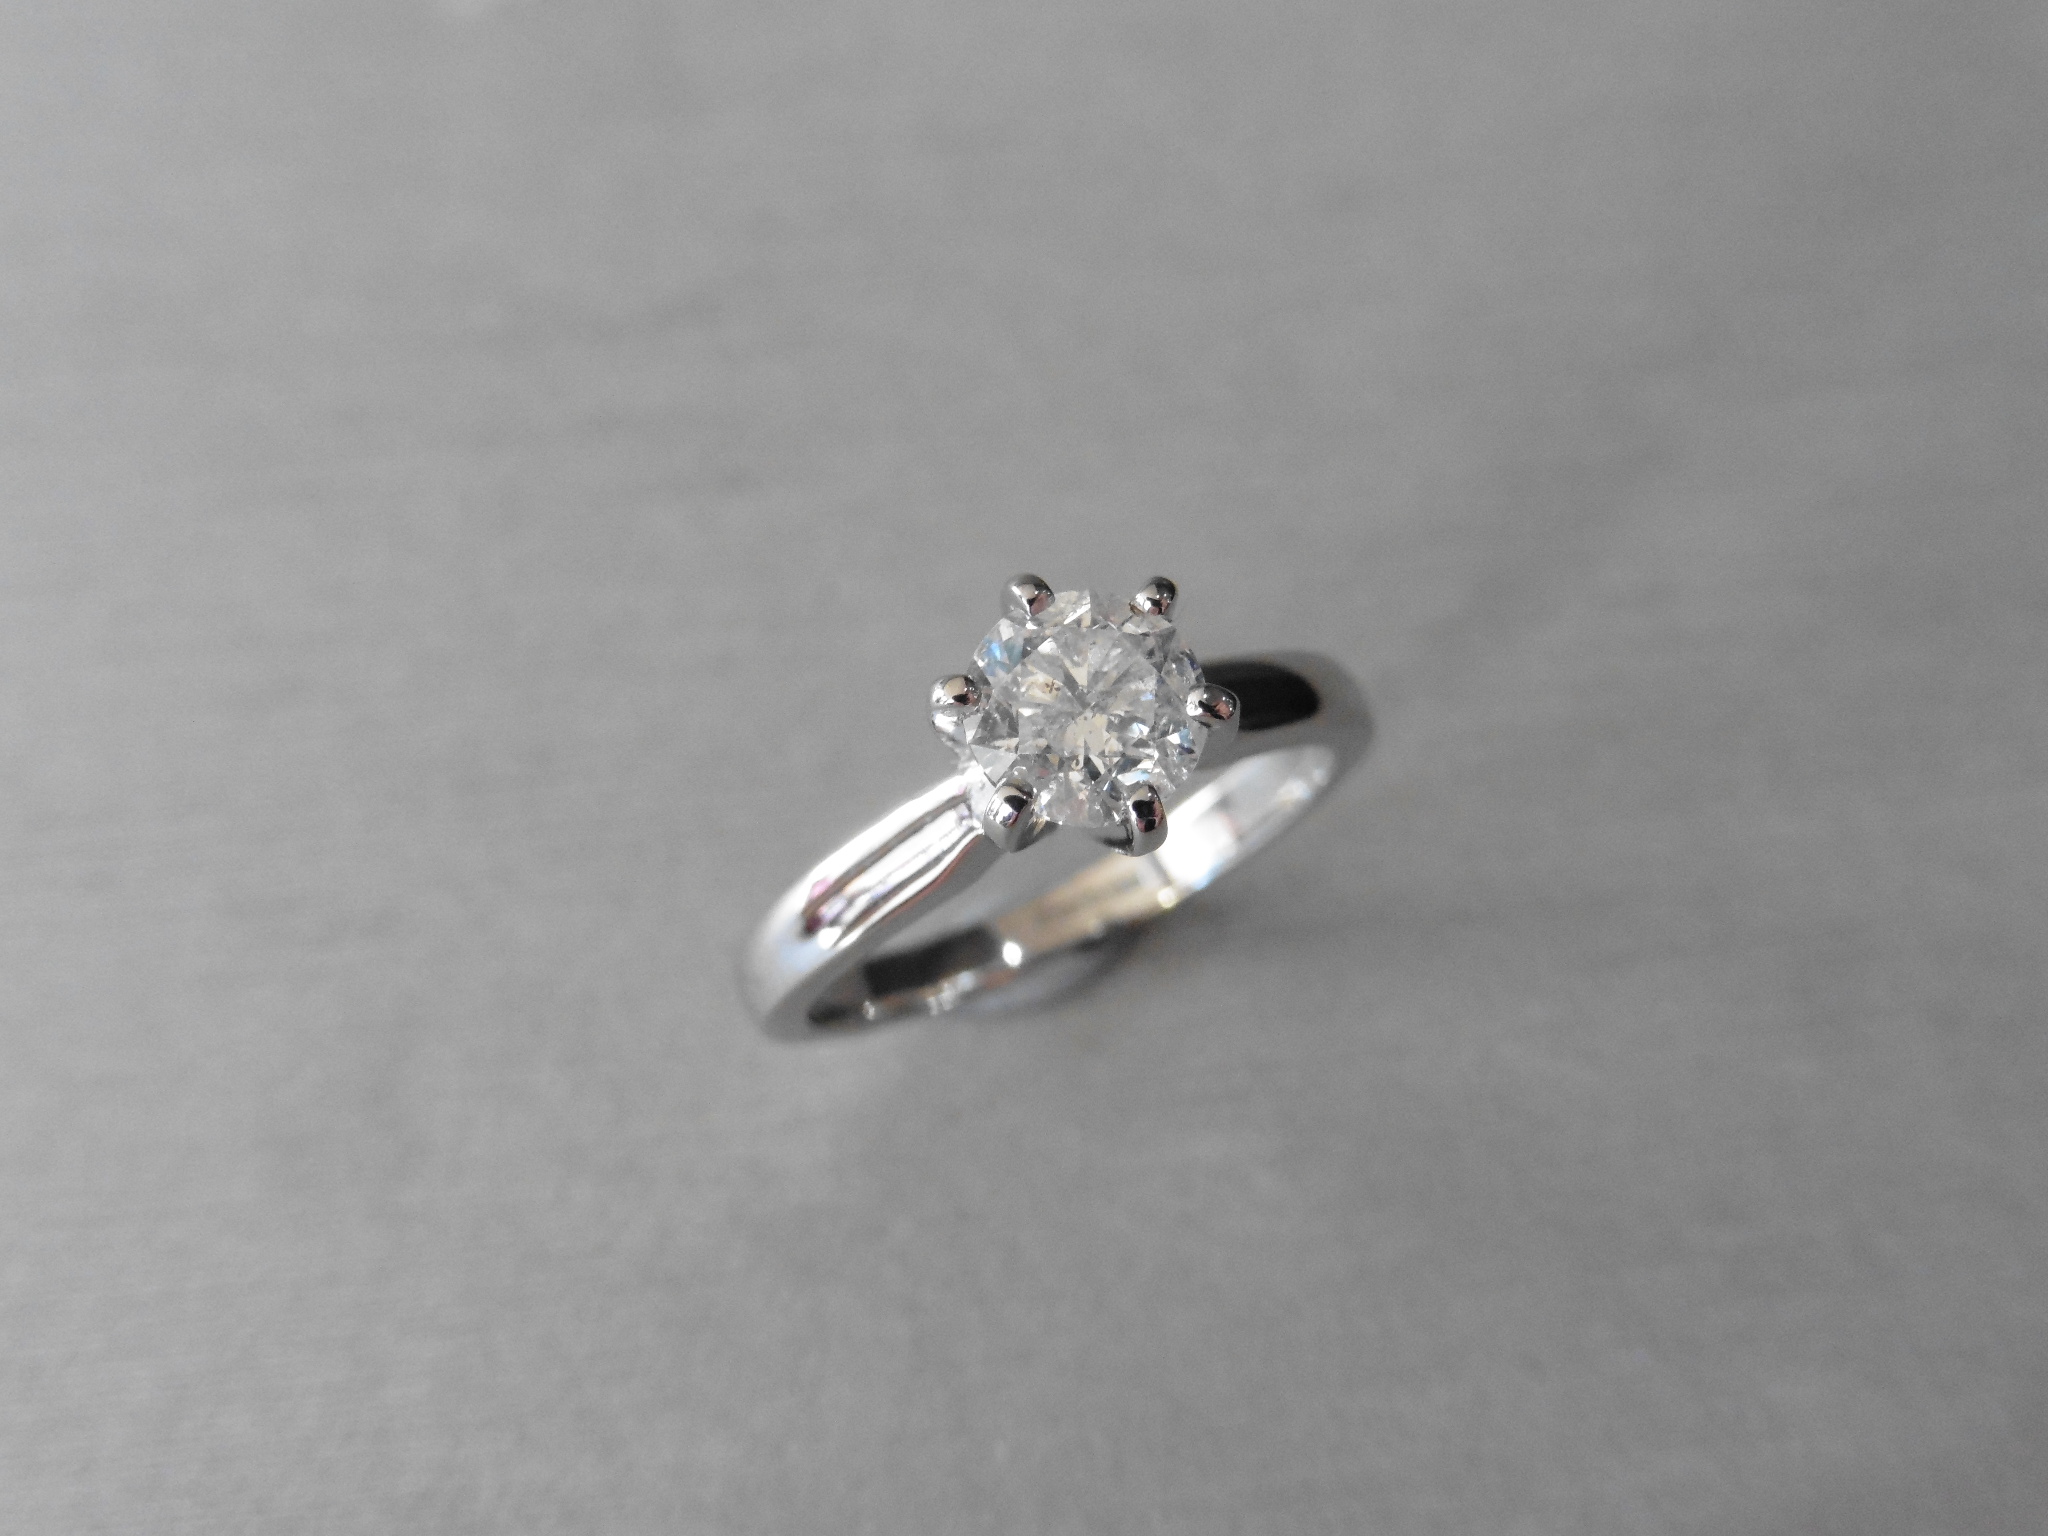 0.70Ct Diamond Solitaire Ring With A Brilliant Cut Diamond.